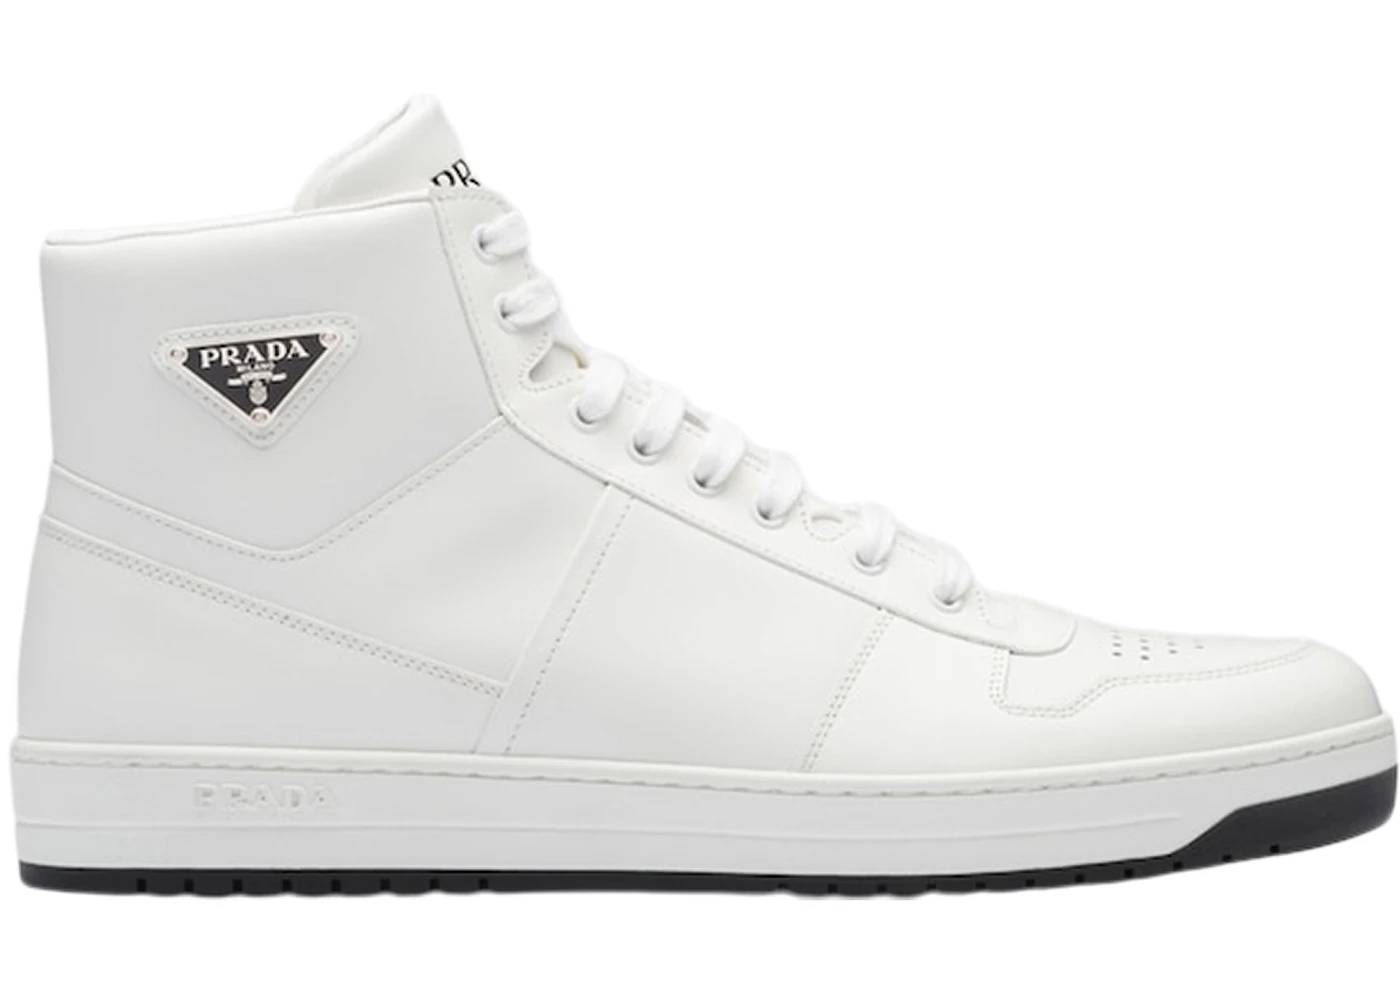 Prada Downtown High Top Sneakers Leather White White Black -  2TE183_3LJ6_F0964 - GB